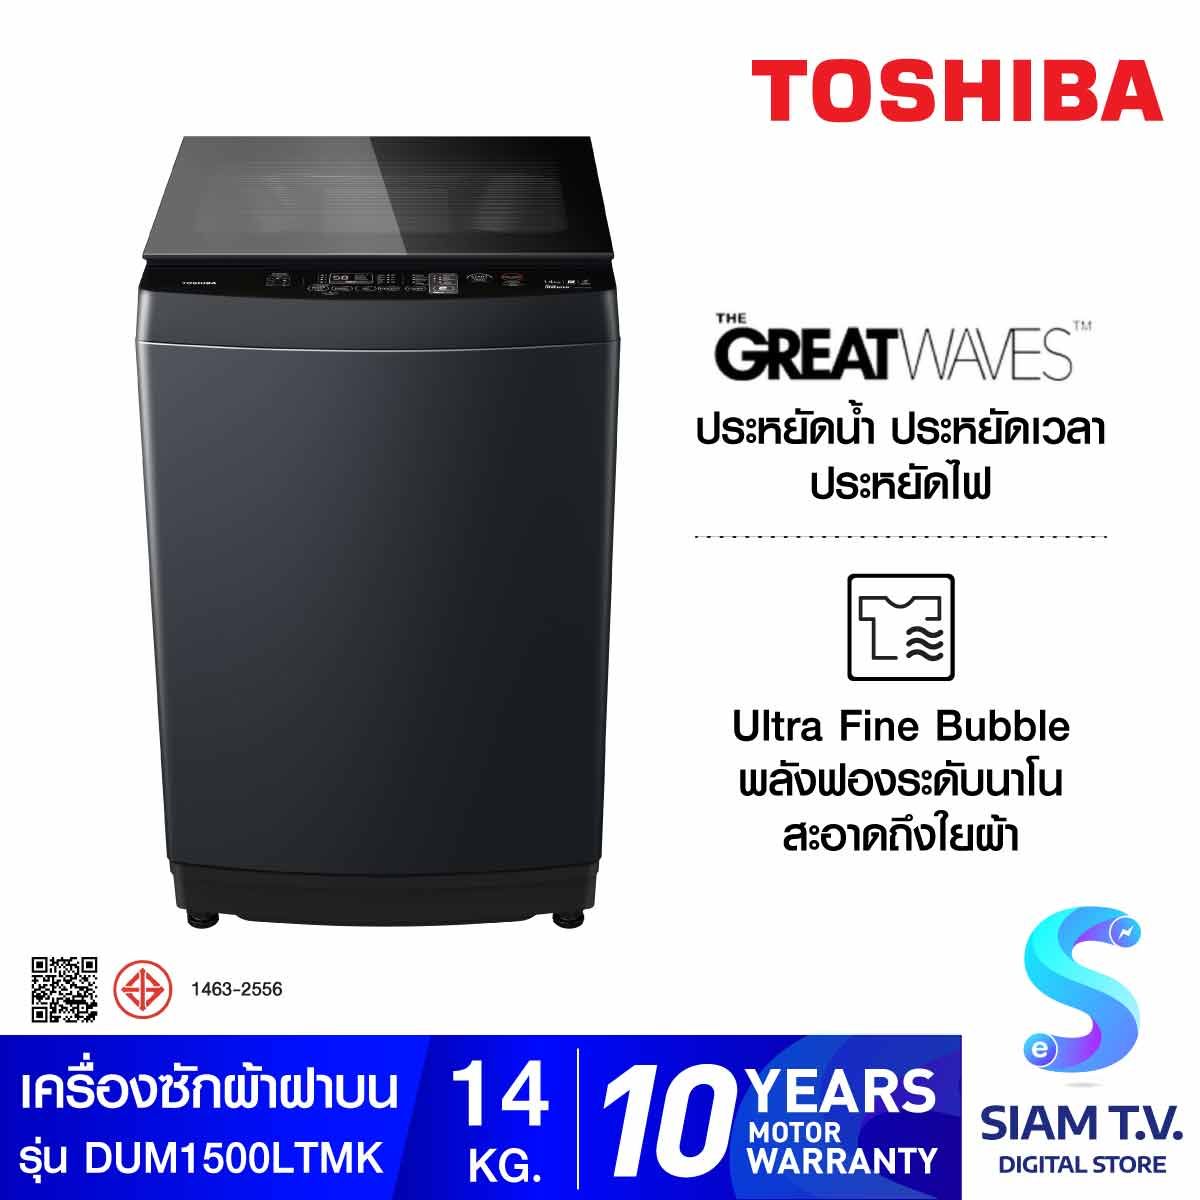 TOSHIBA เครื่องซักผ้าฝาบน 14KG DD INVERTER รุ่น AW-DUM1500LT(MK)